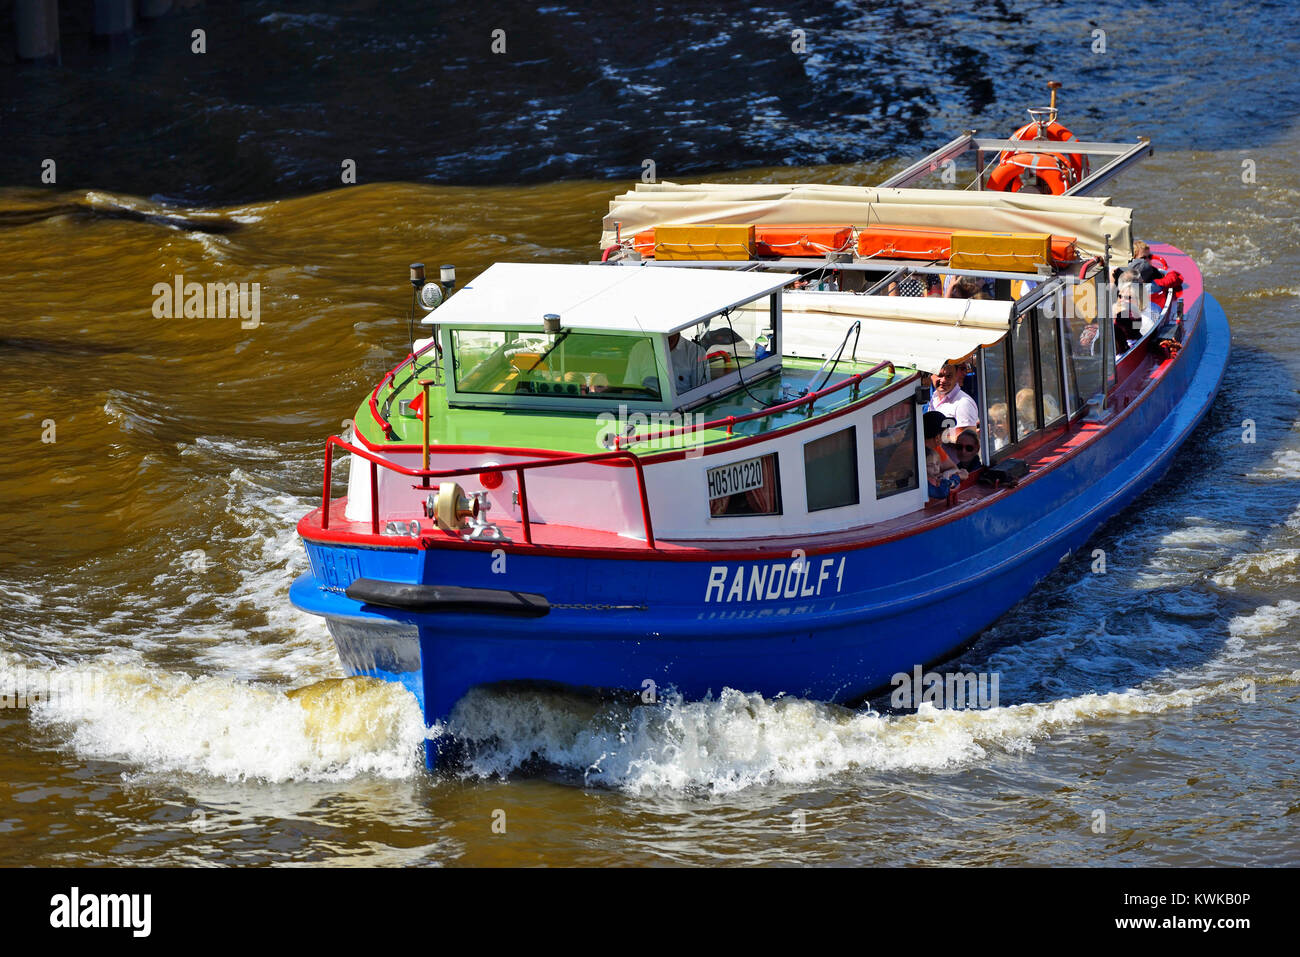 Longboat in Magdeburg porto di Amburgo, Germania, Europa Barkasse im Magdeburger Hafen in Amburgo, Deutschland, Europa Foto Stock